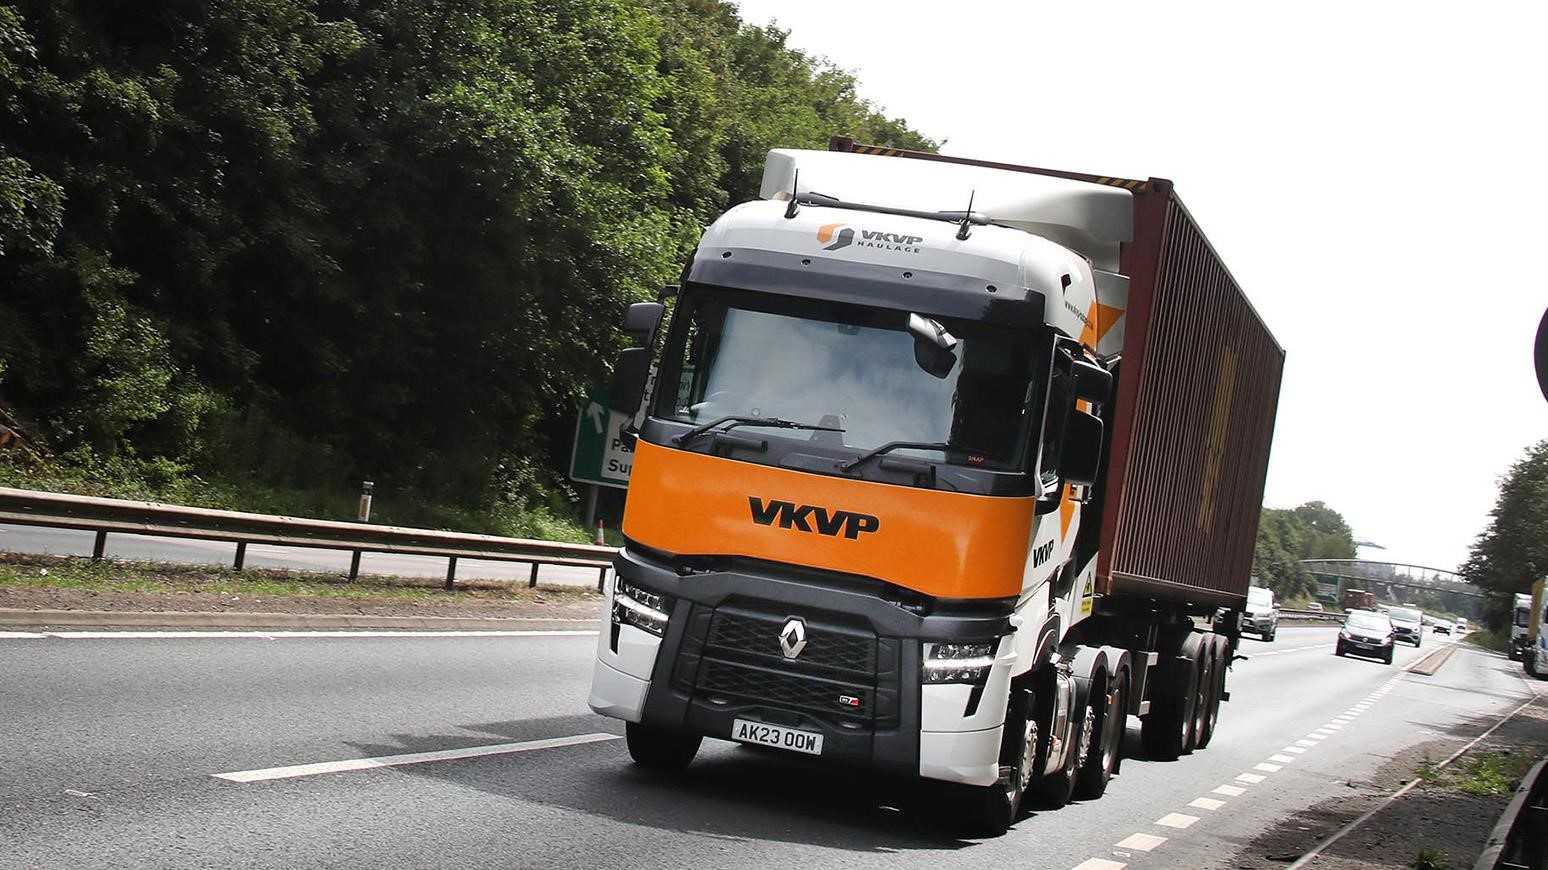 VKVP Haulage Kicks Off Fleet Renewal Programme With Acquisition Of 5 Fuel-Efficient Renault T480 Trucks